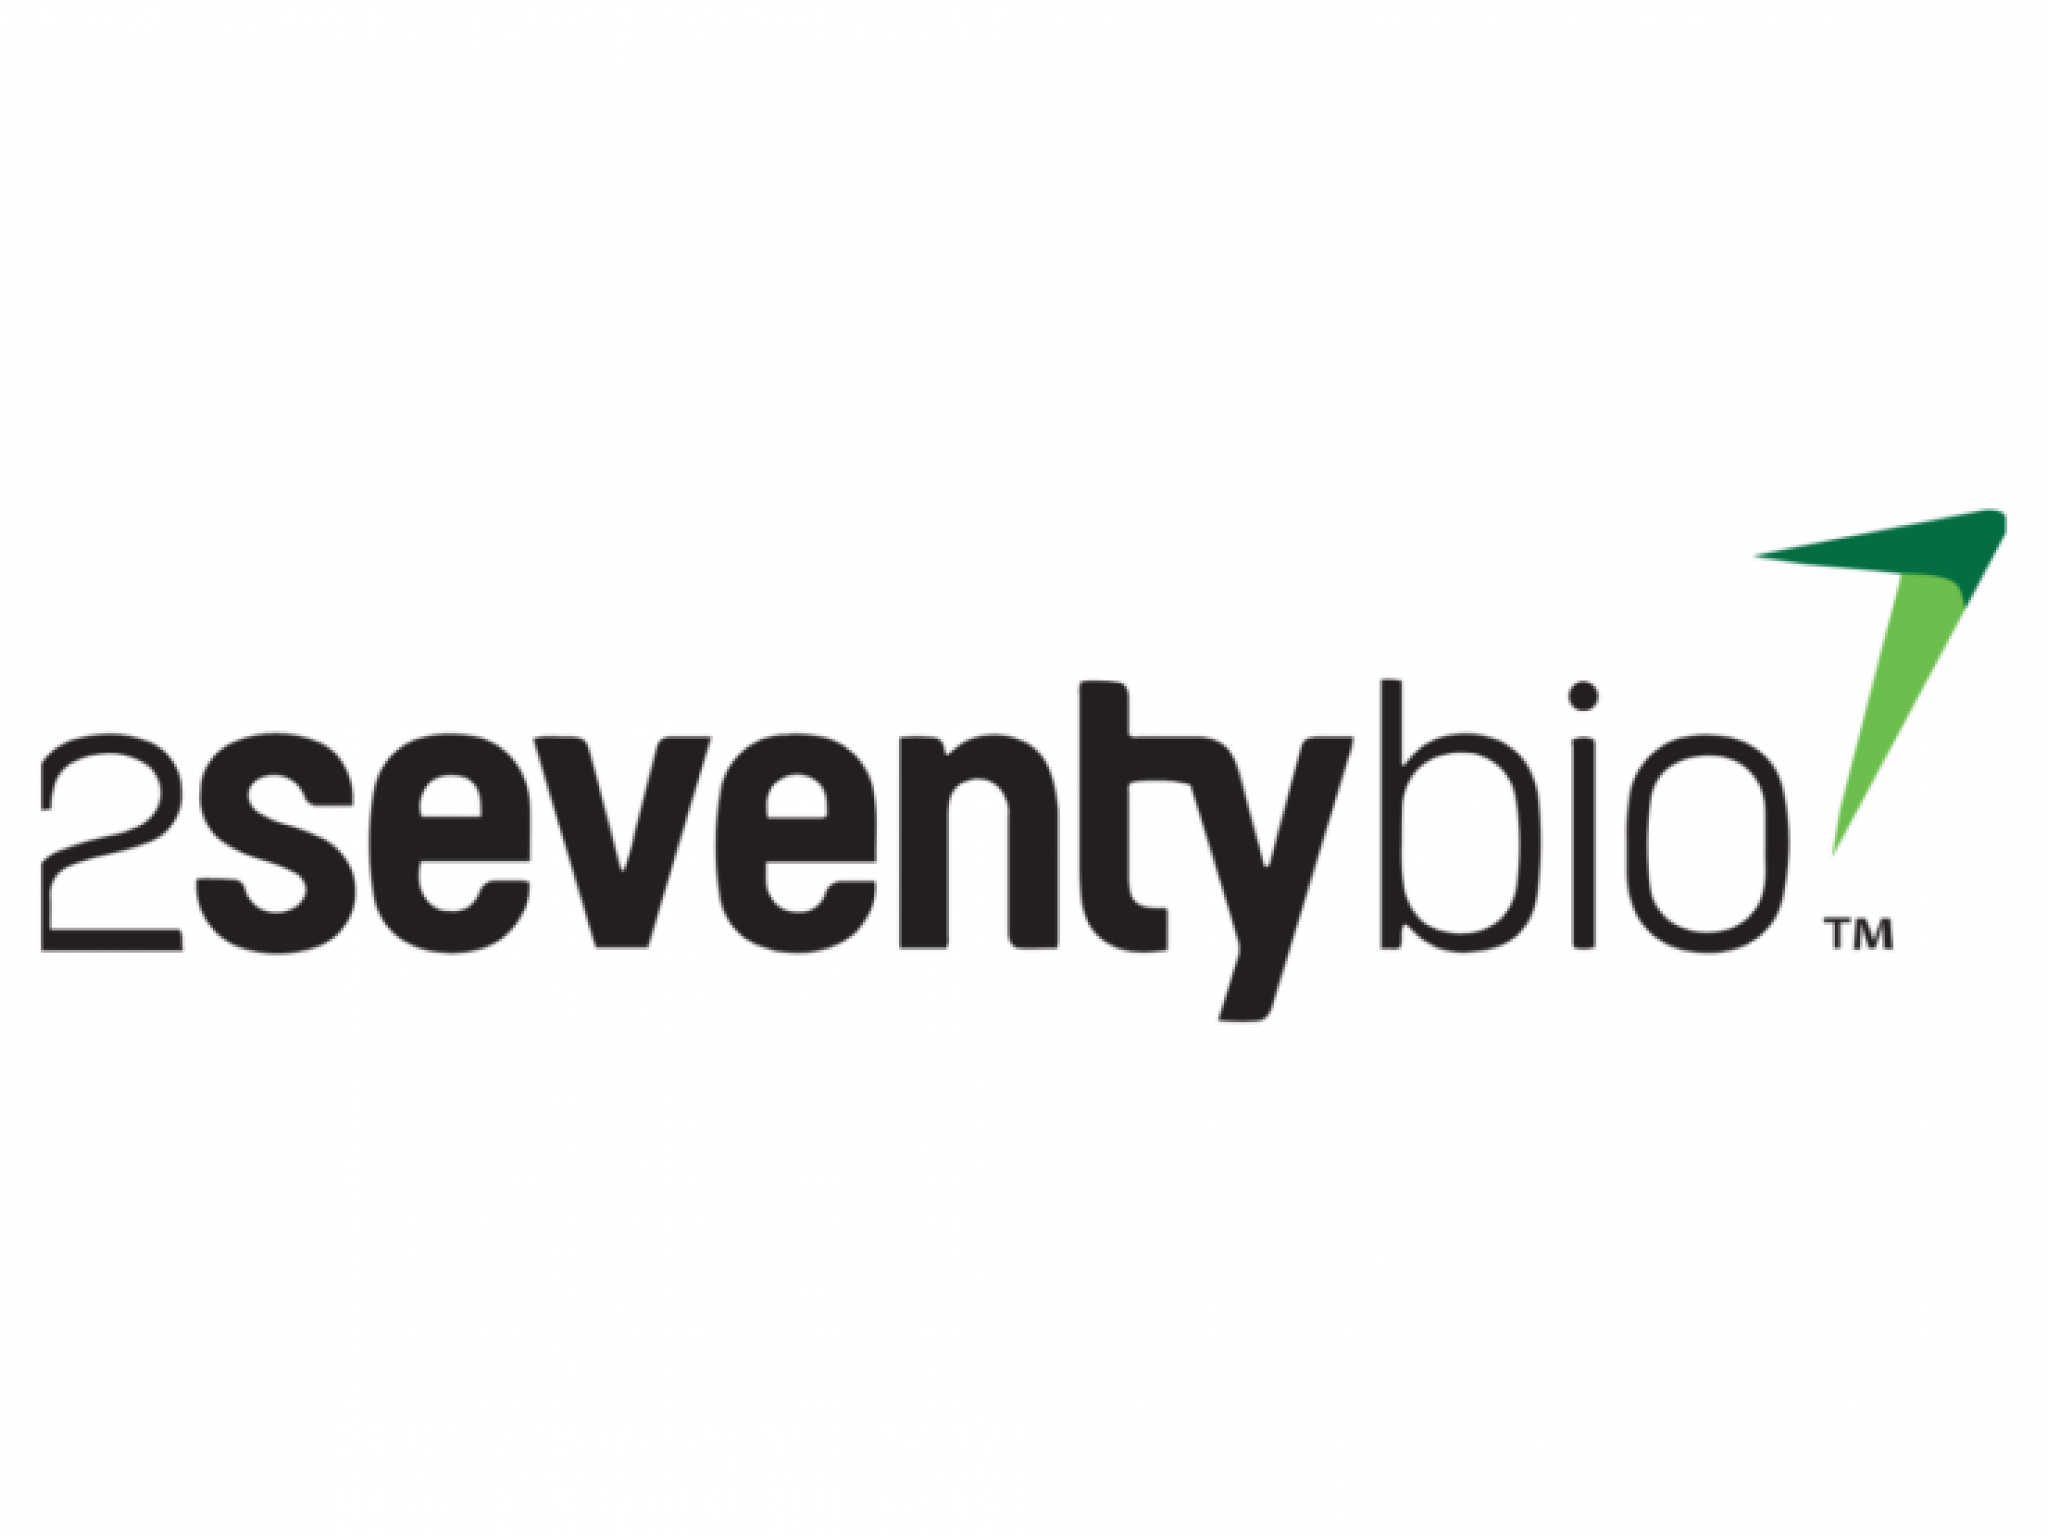  novo-nordisk-buys-2seventys-hemophilia-a-program-divestiture-supports-exclusive-focus-on-abecma 